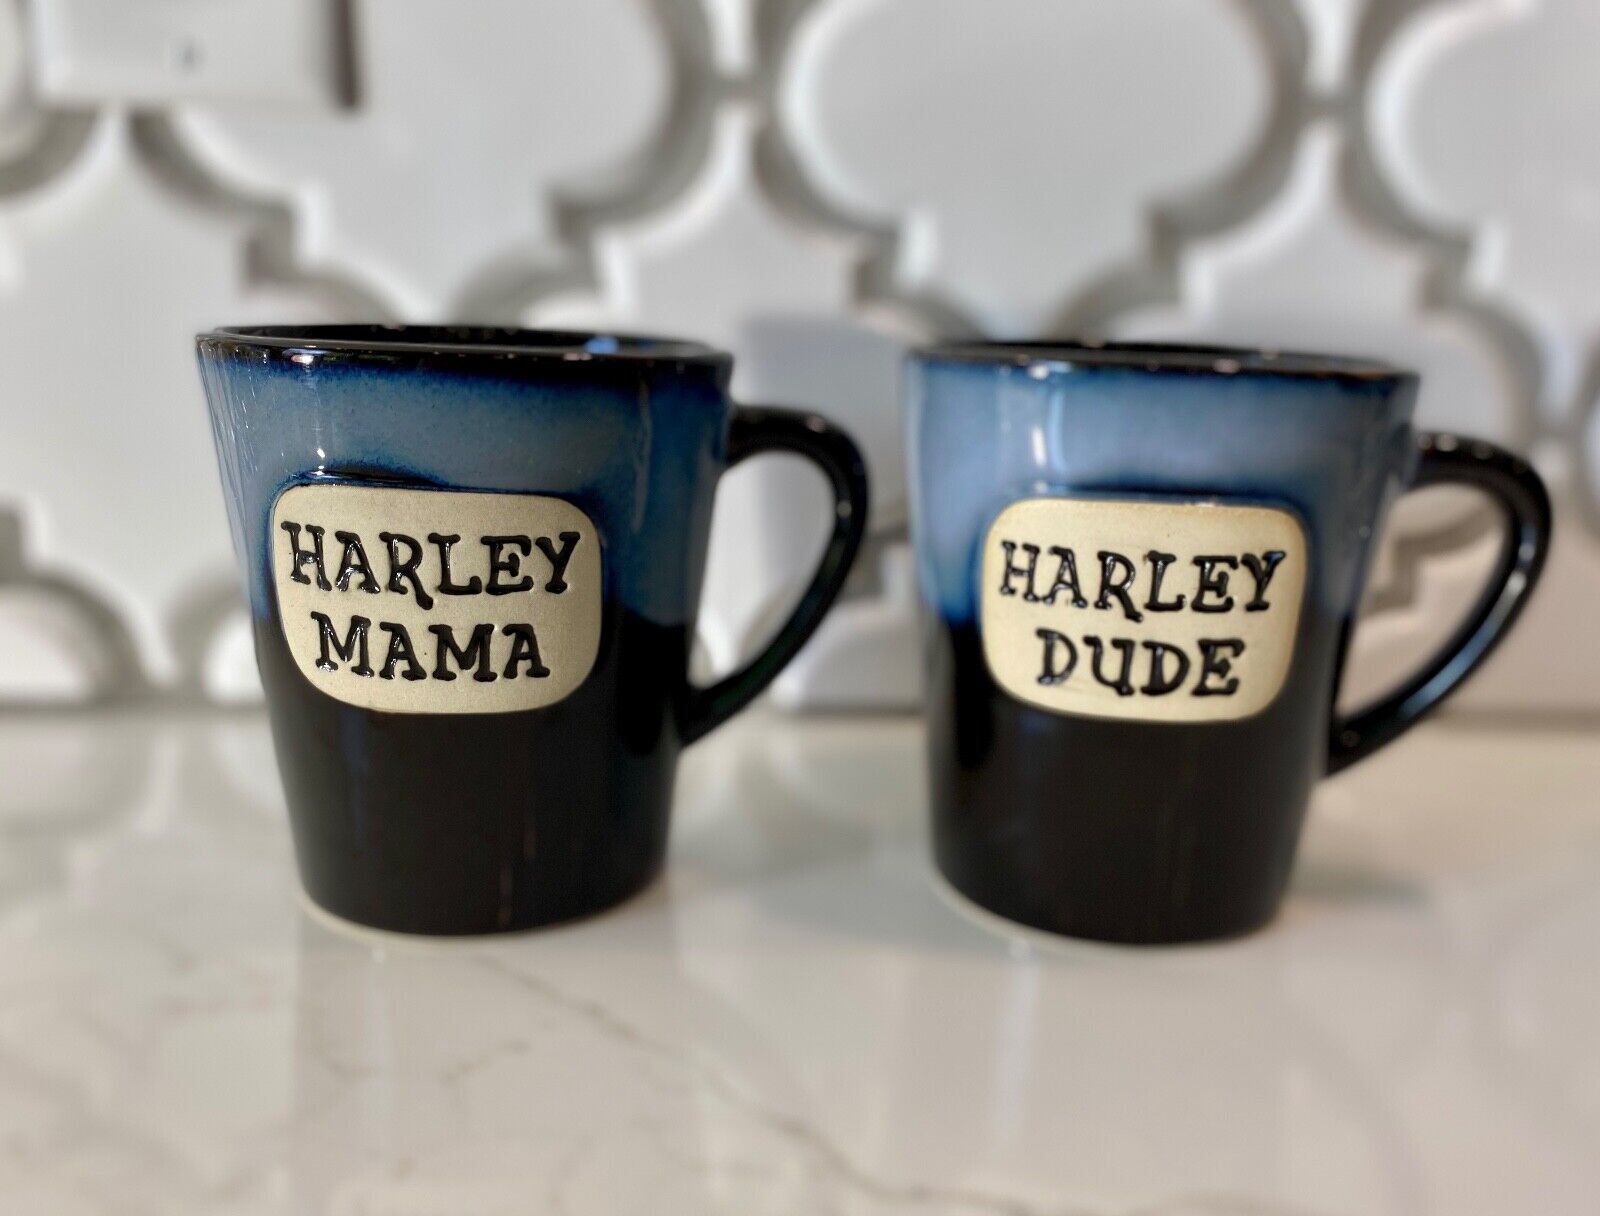 Harley Mama Dude Mug Coffee Tea Harley-Davidson Motorcycle Ganz Blue Black Set 2